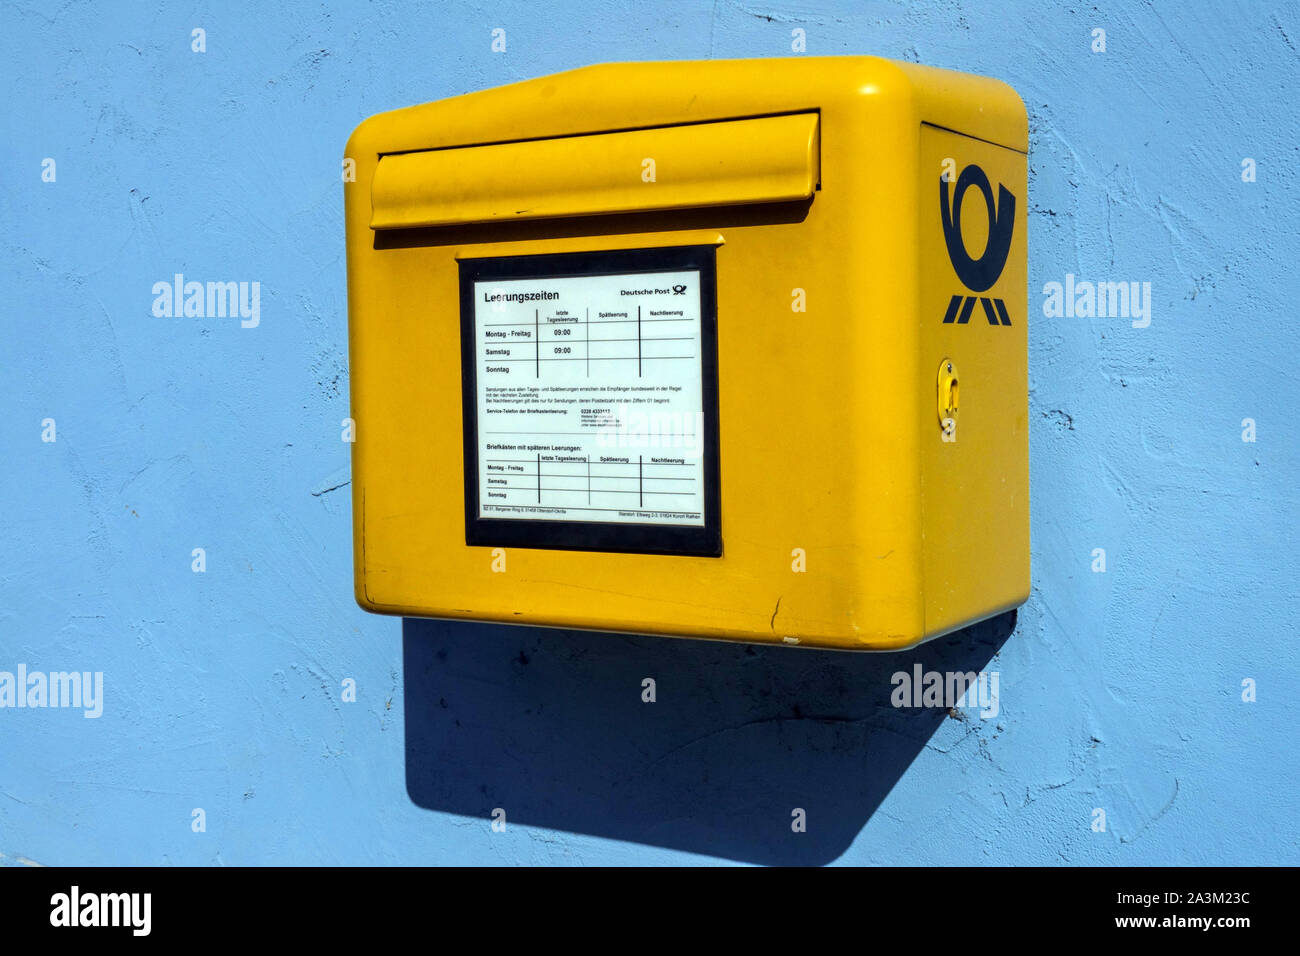 Deutsche Post box Germany sign Stock Photo - Alamy